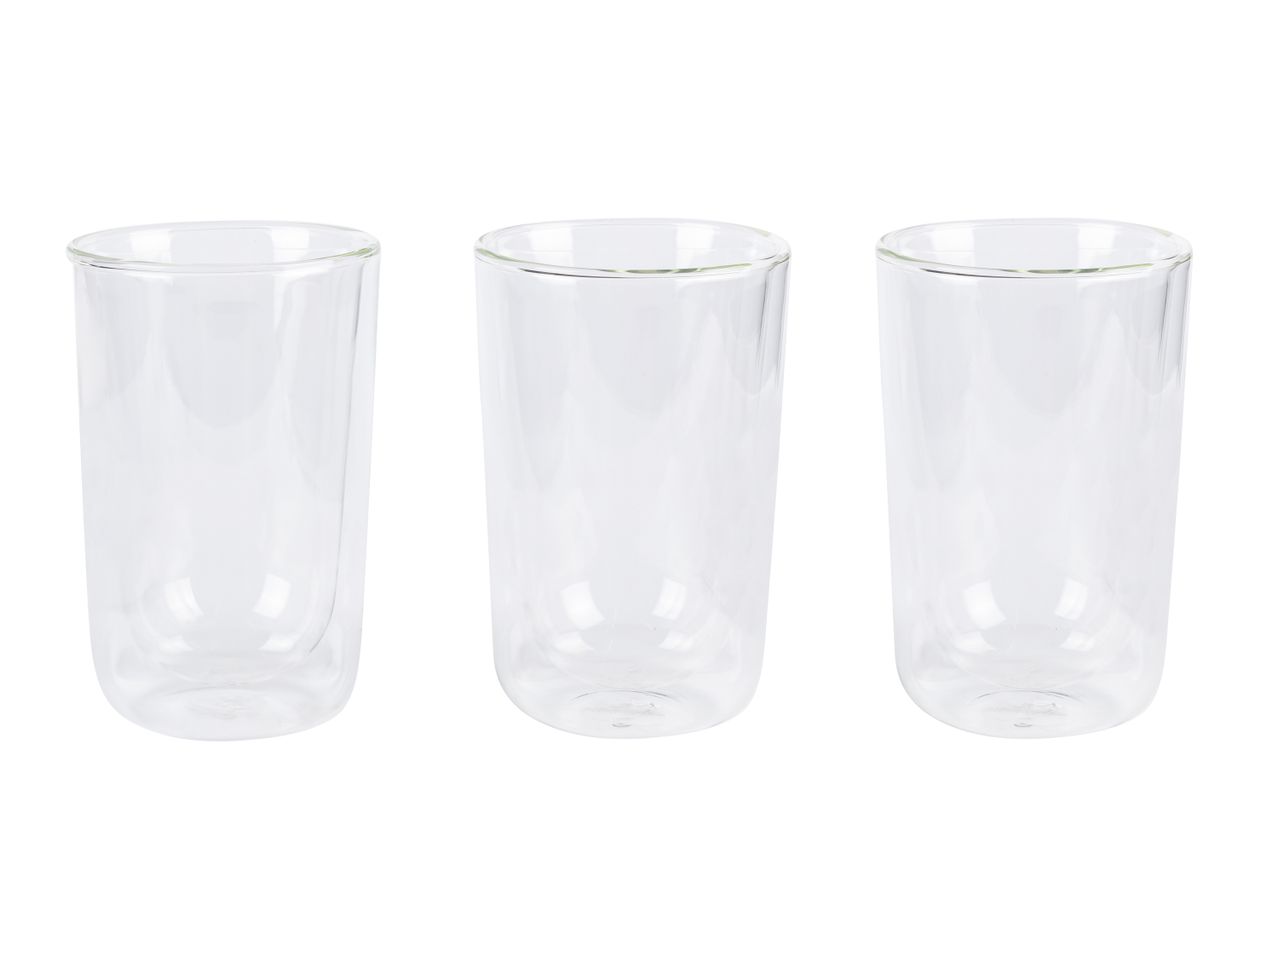 Tazze o bicchieri termici , prezzo 9.99 EUR 
Tazze o bicchieri termici 2, 3 o 4 ...